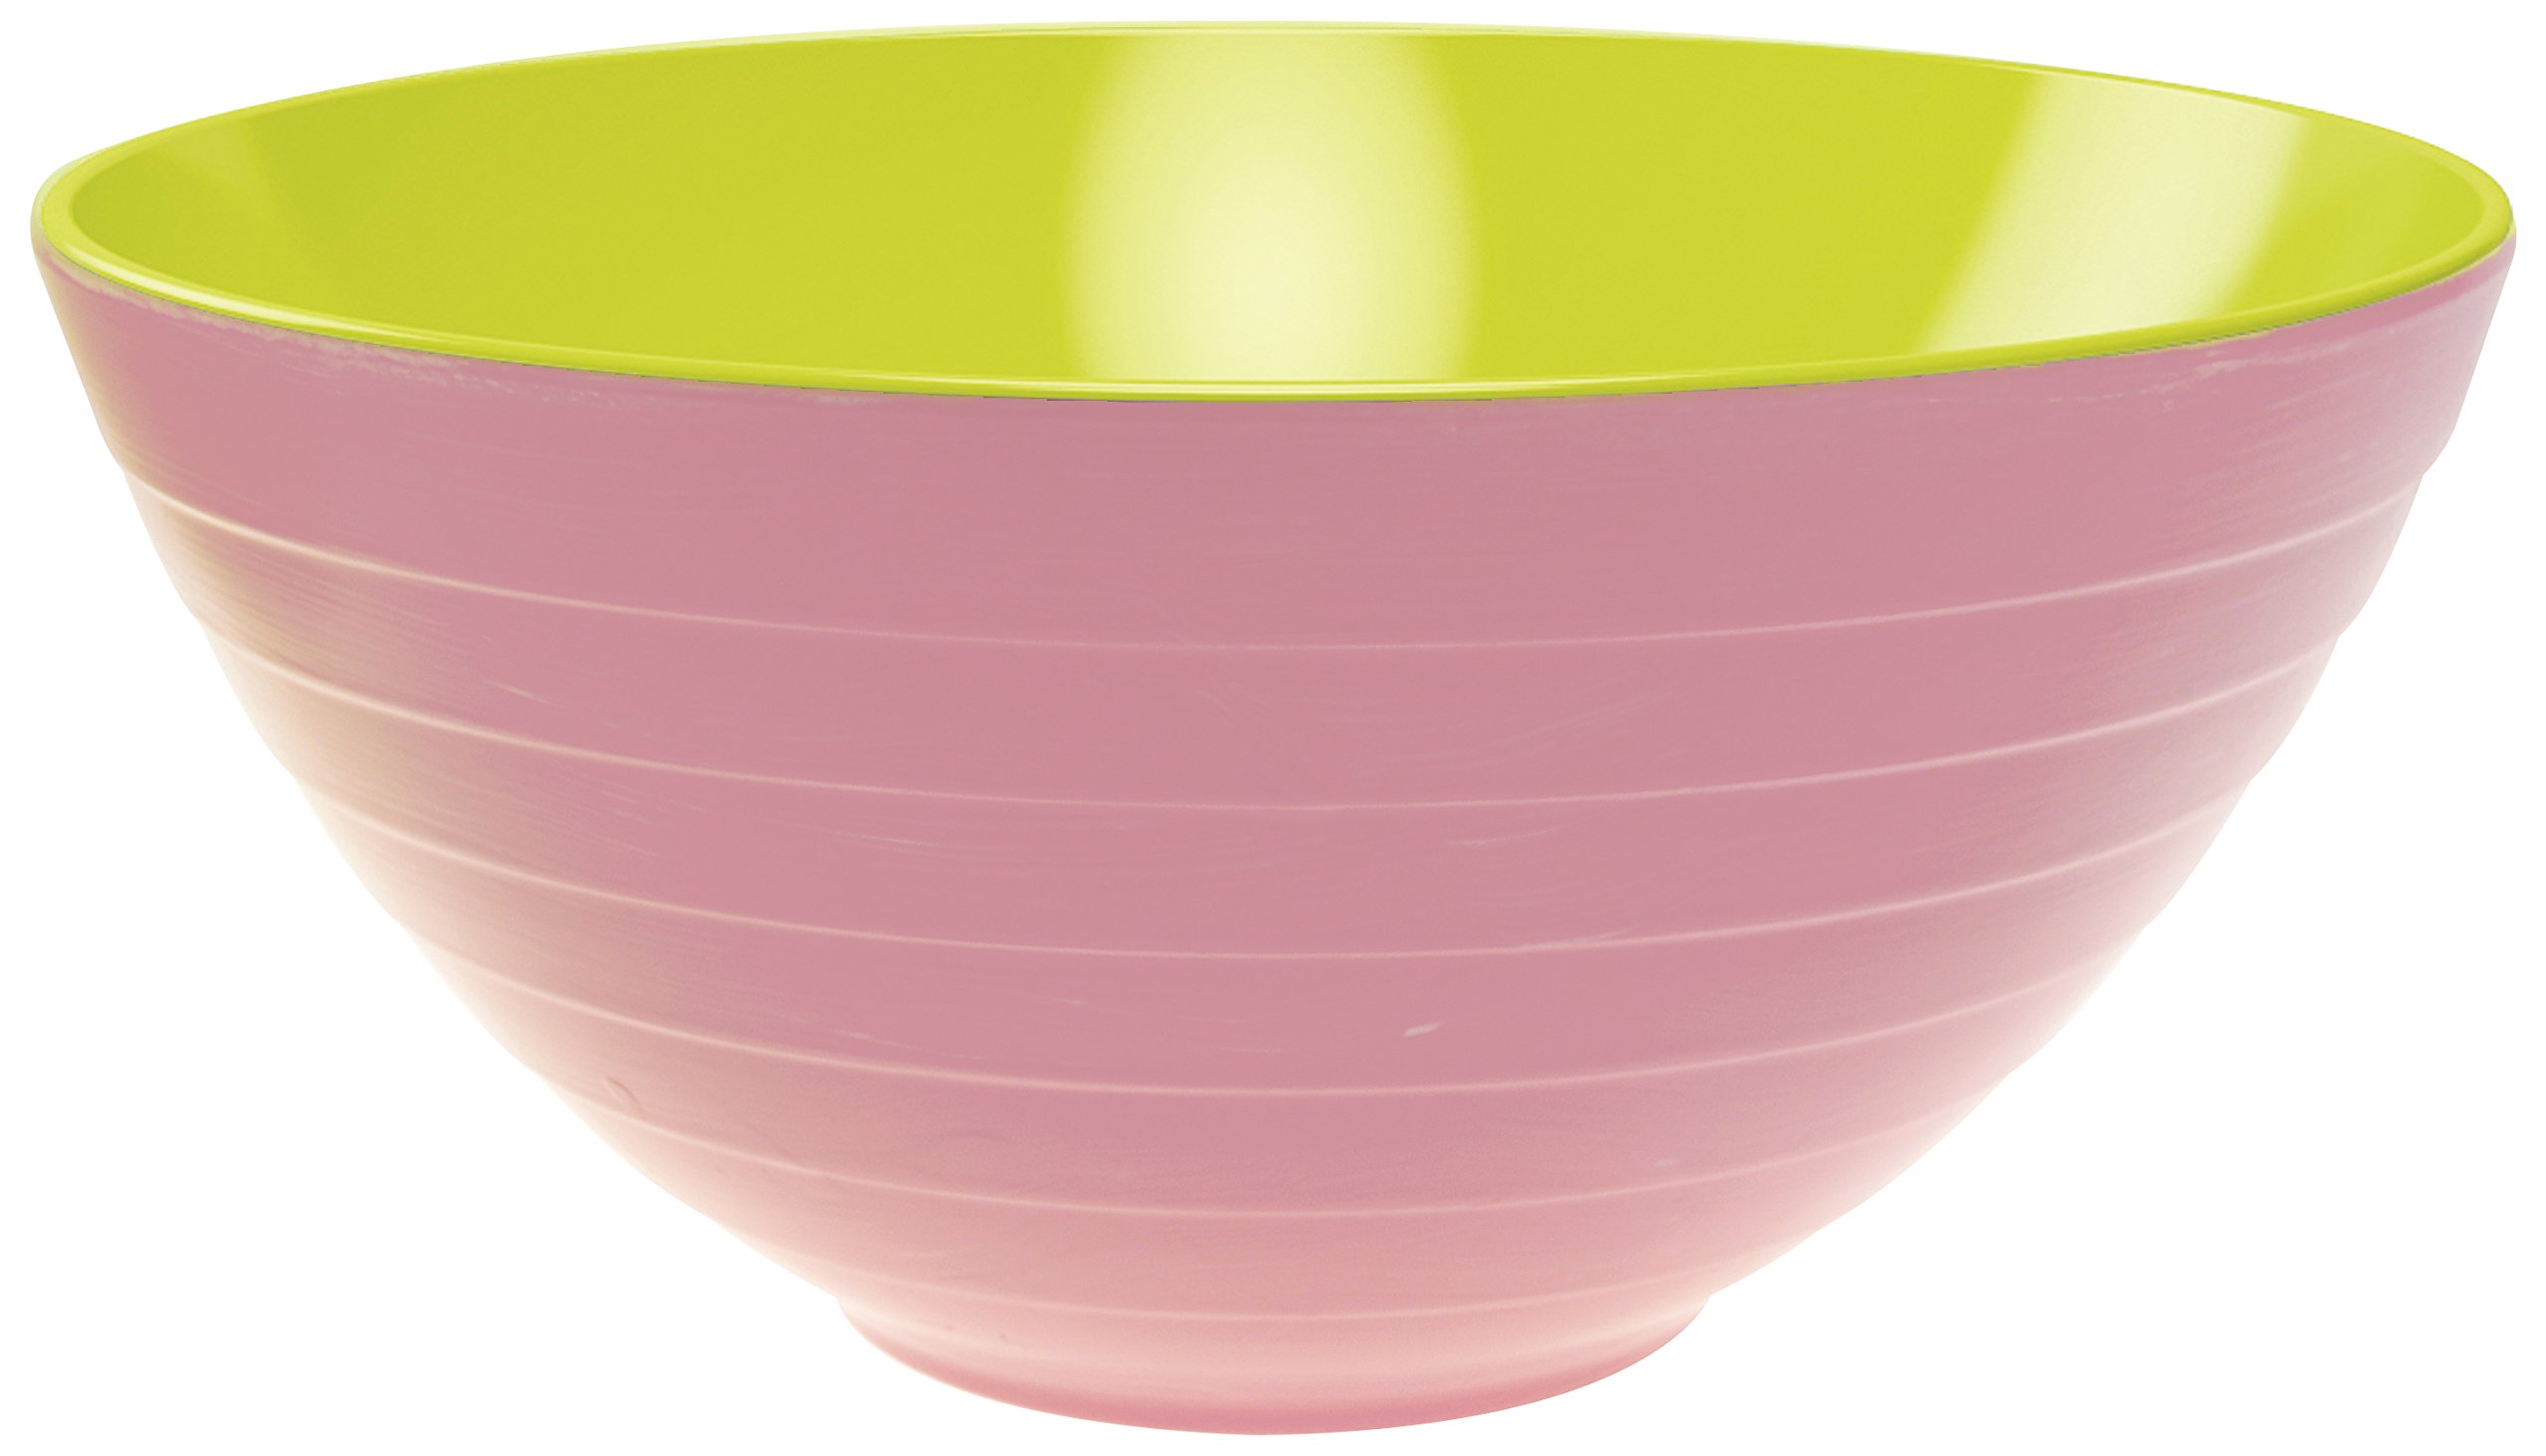 zak! Designs 2173 – 0321 Wave Salatschüssel grün Kiwi/Pink 28 cm